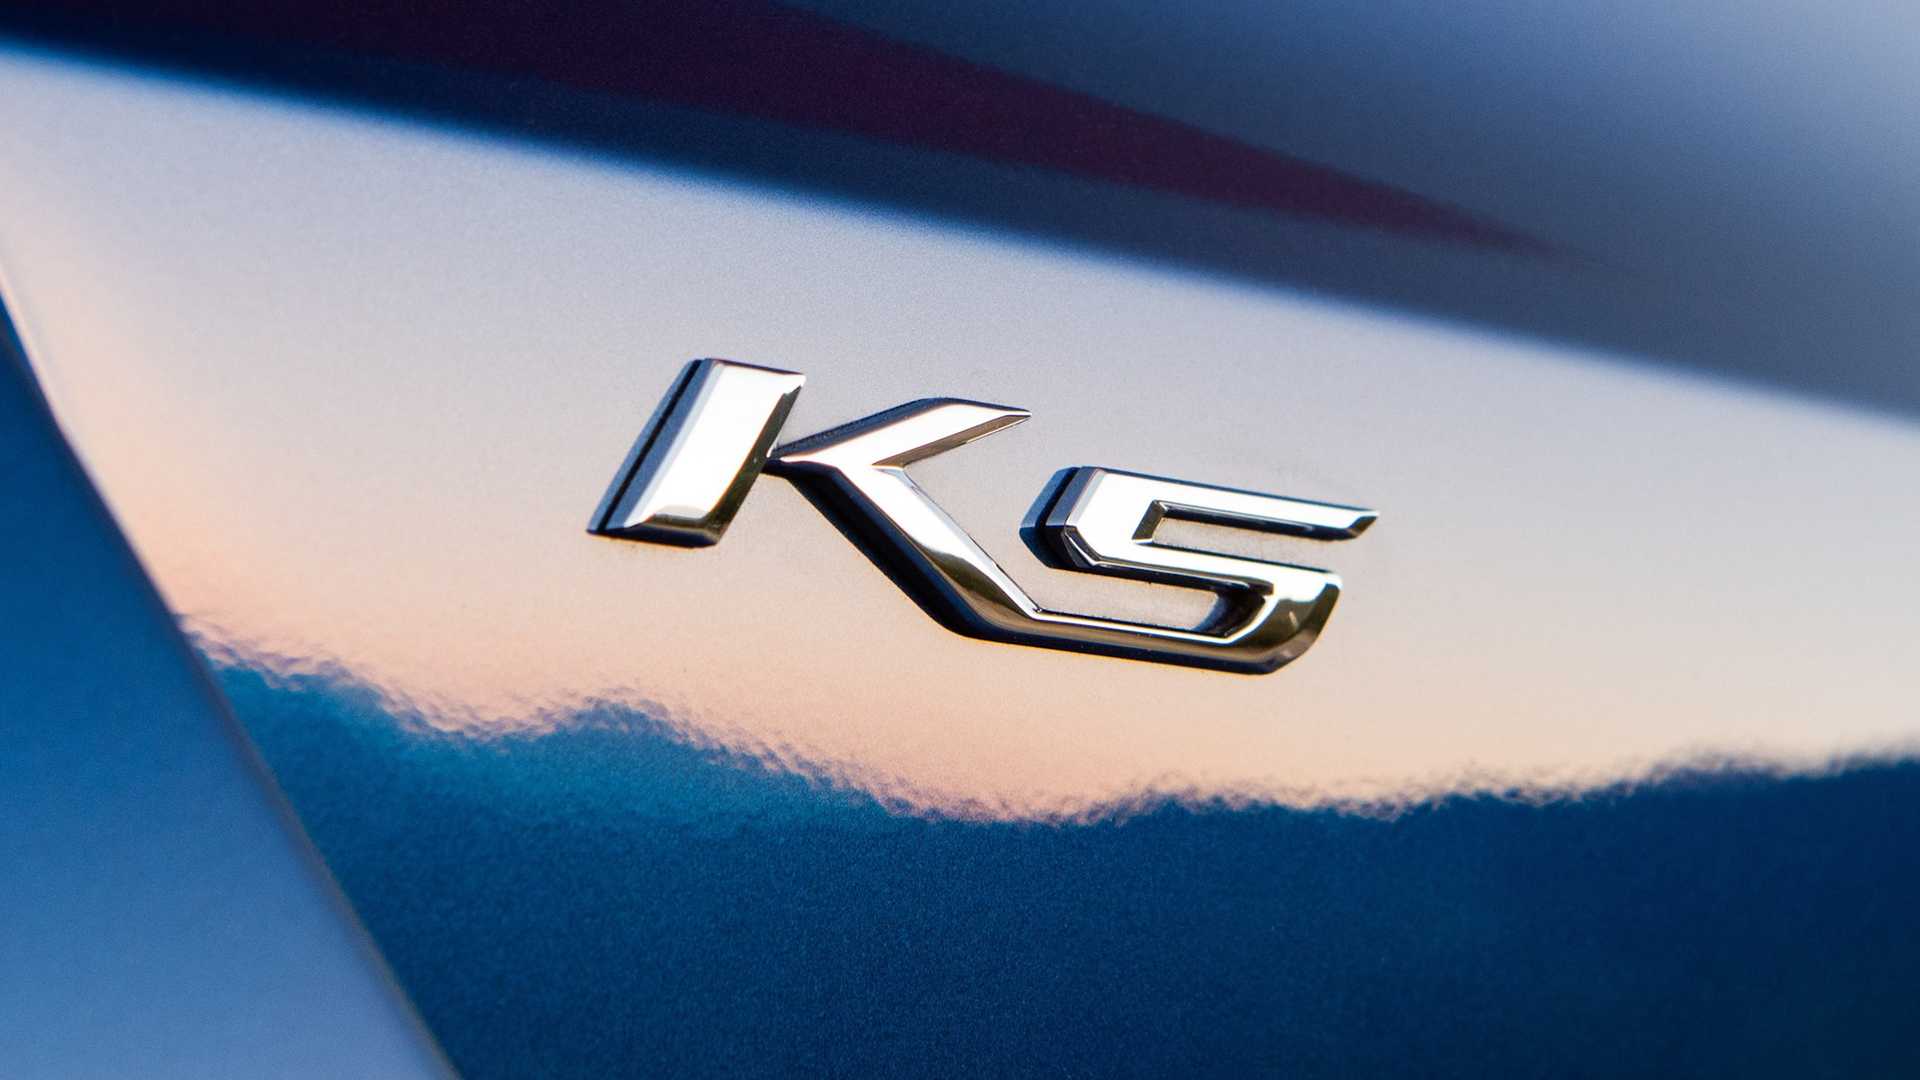 نشان K5 شرکت کیا / Kia